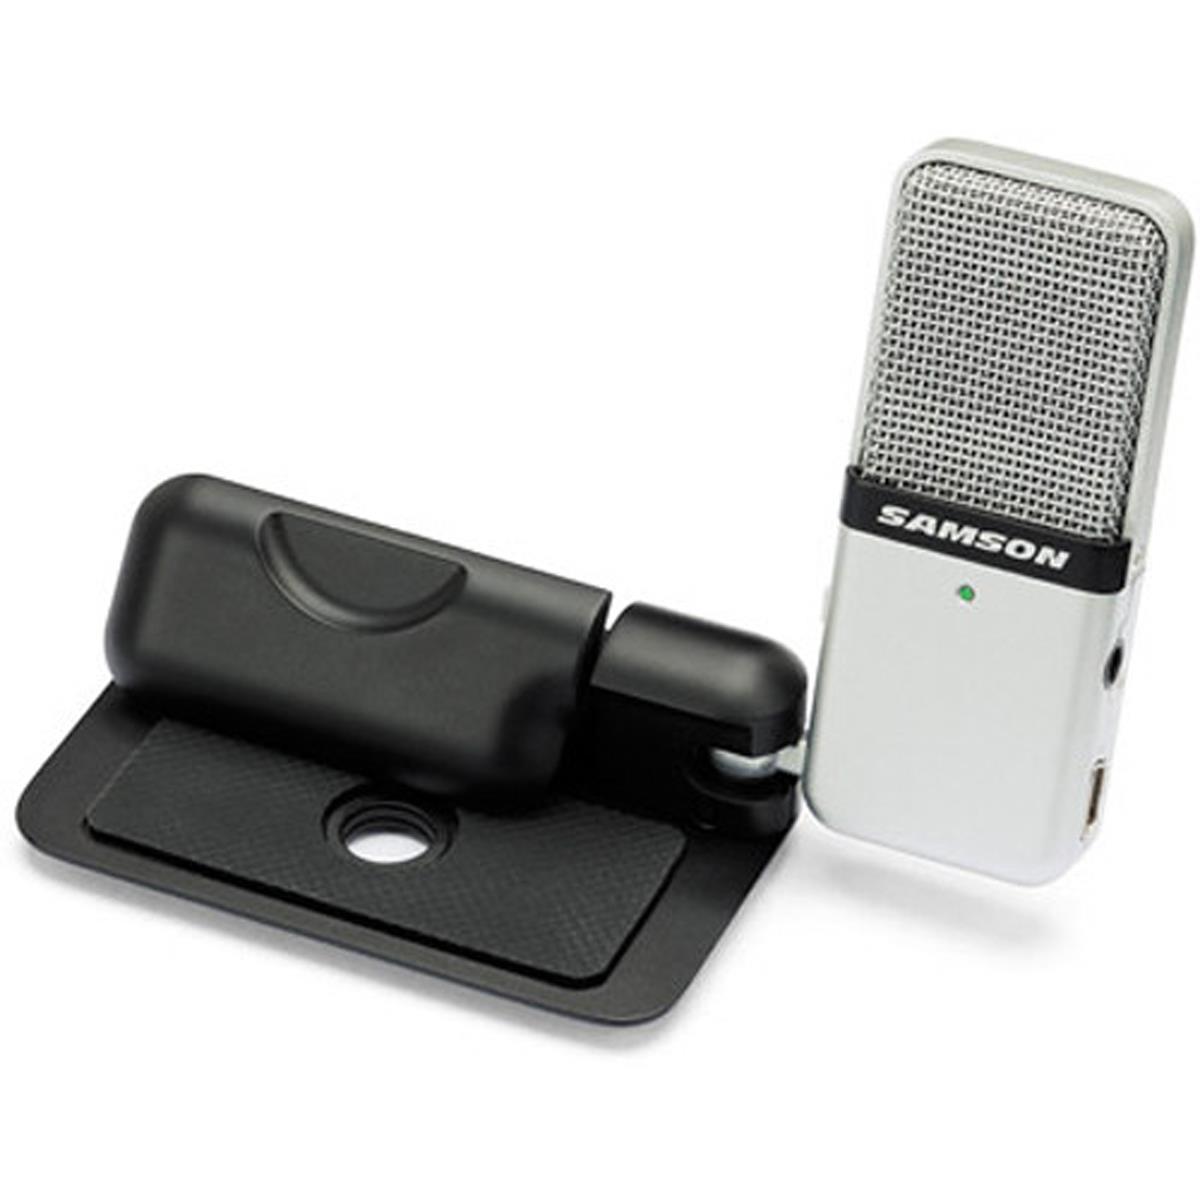 Samson Go Mic USB Microphone for Mac & PC $20 + Free Shipping